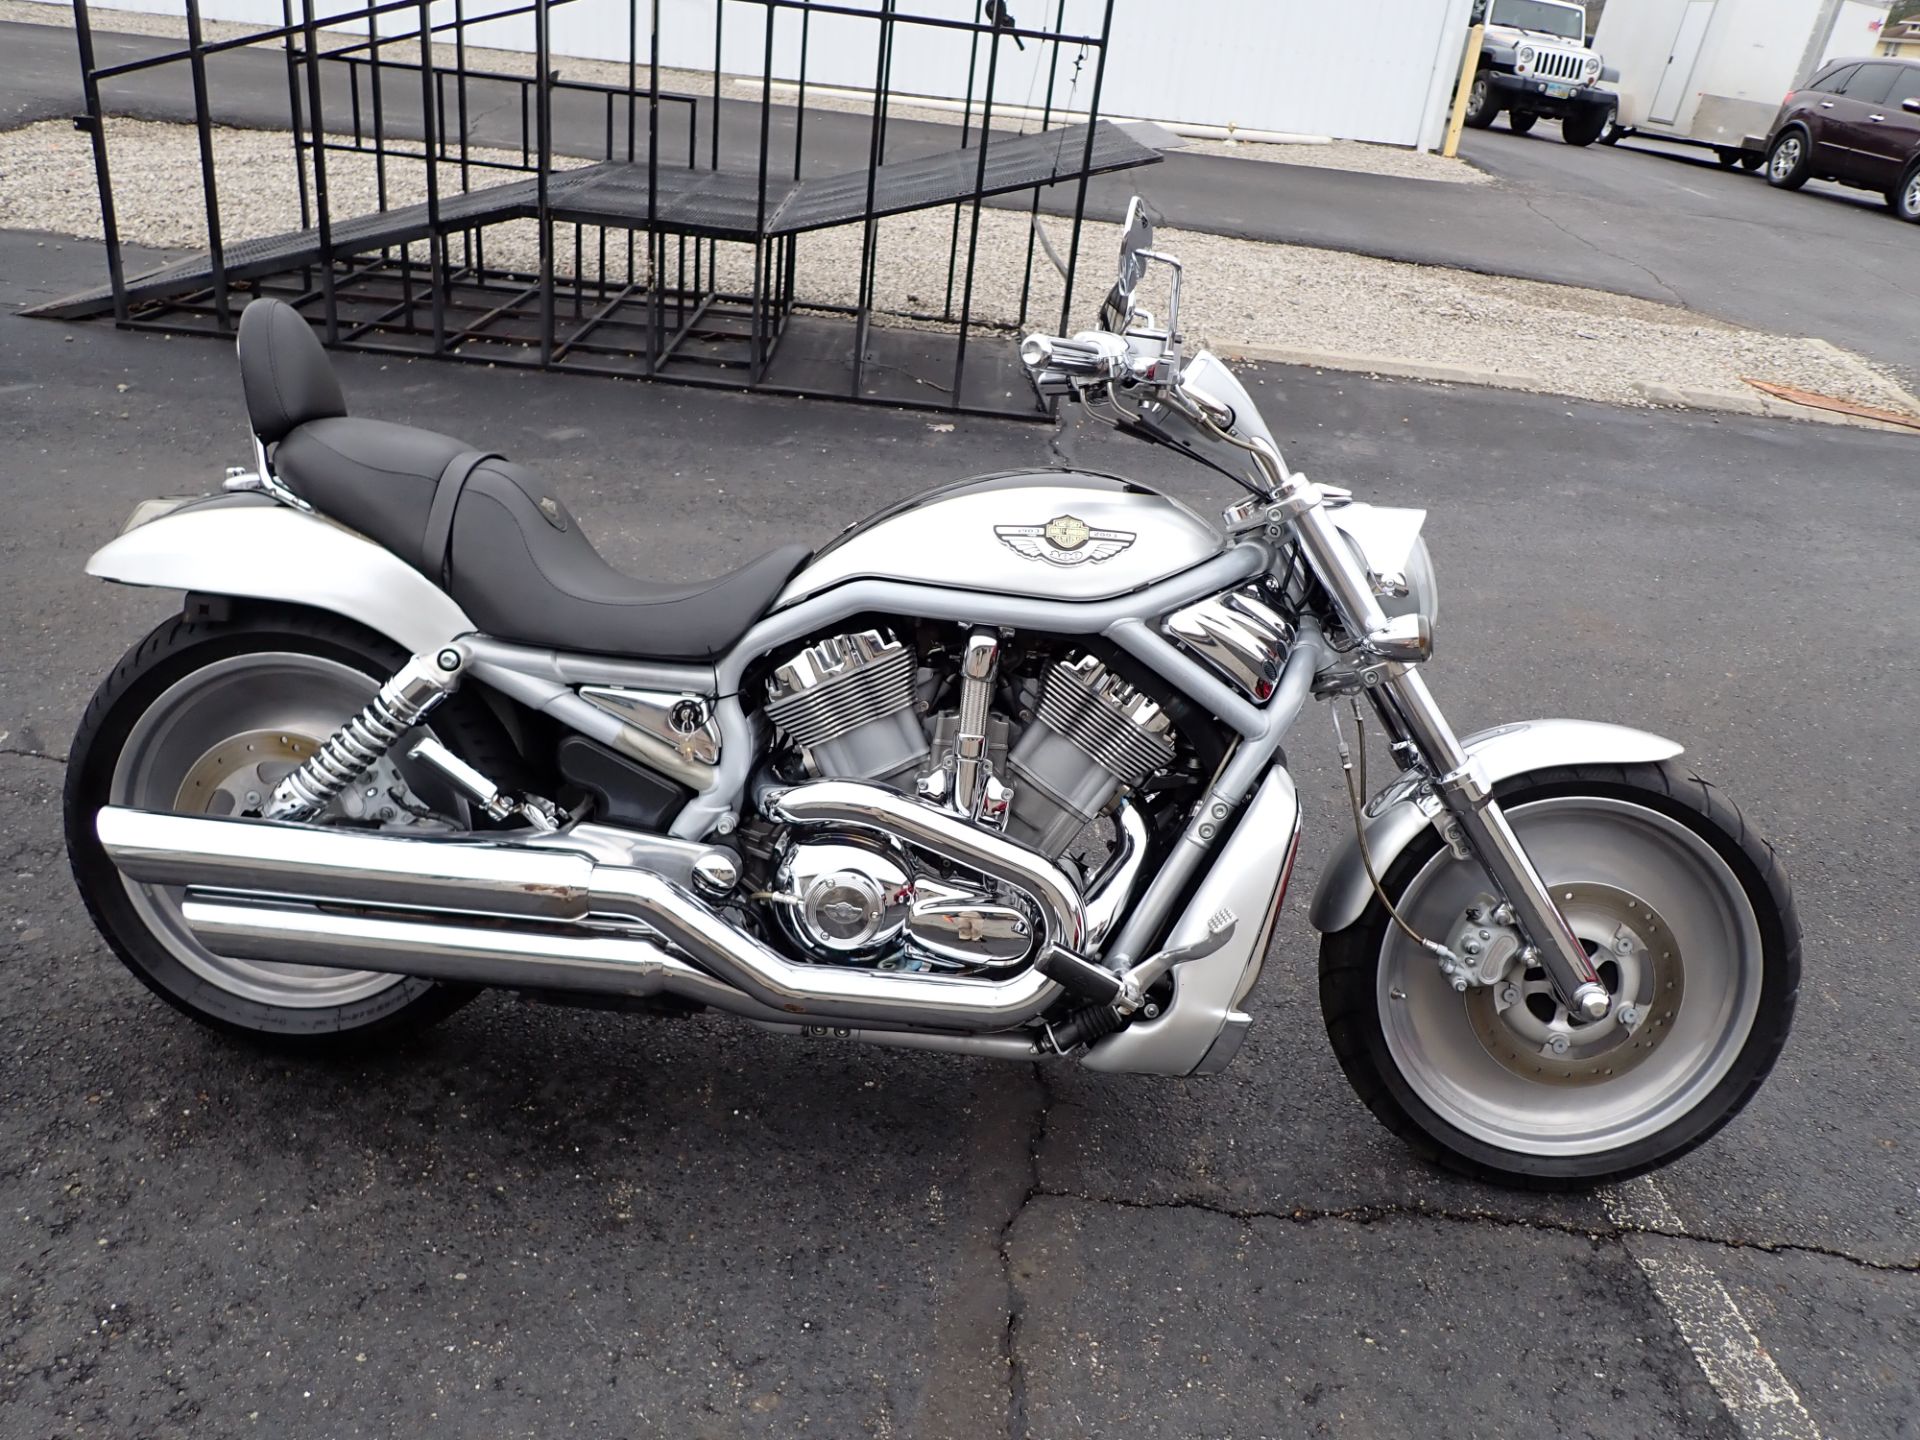 2003 Harley-Davidson VRSCA  V-Rod® in Massillon, Ohio - Photo 1